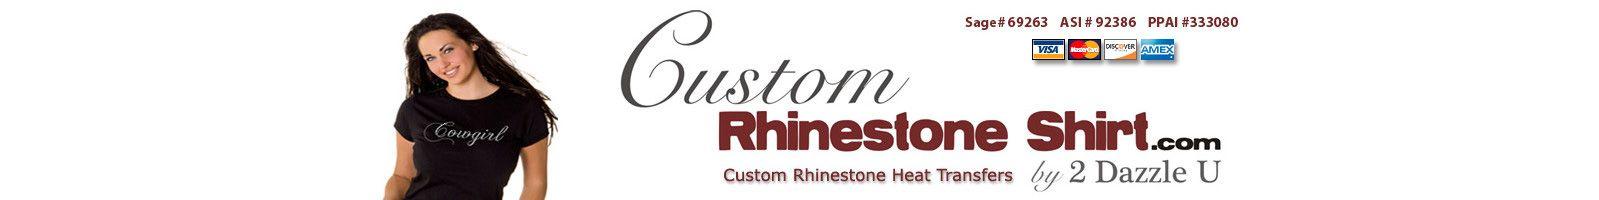 Rhinestone Company Logo - Wholesale Rhinestone Appliques & Custom Heat Transfers from 2 Dazzle U